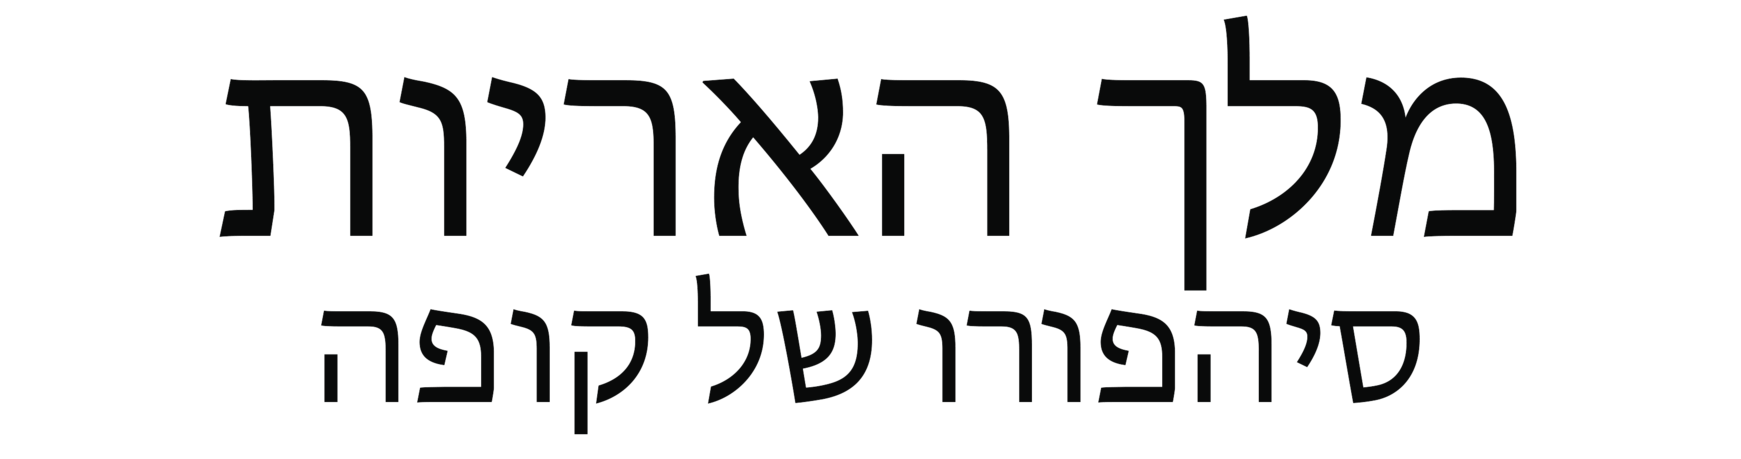 Hebrew Logo - Kopa's Story Logo (Hebrew) by AndrewShilohJeffery on DeviantArt